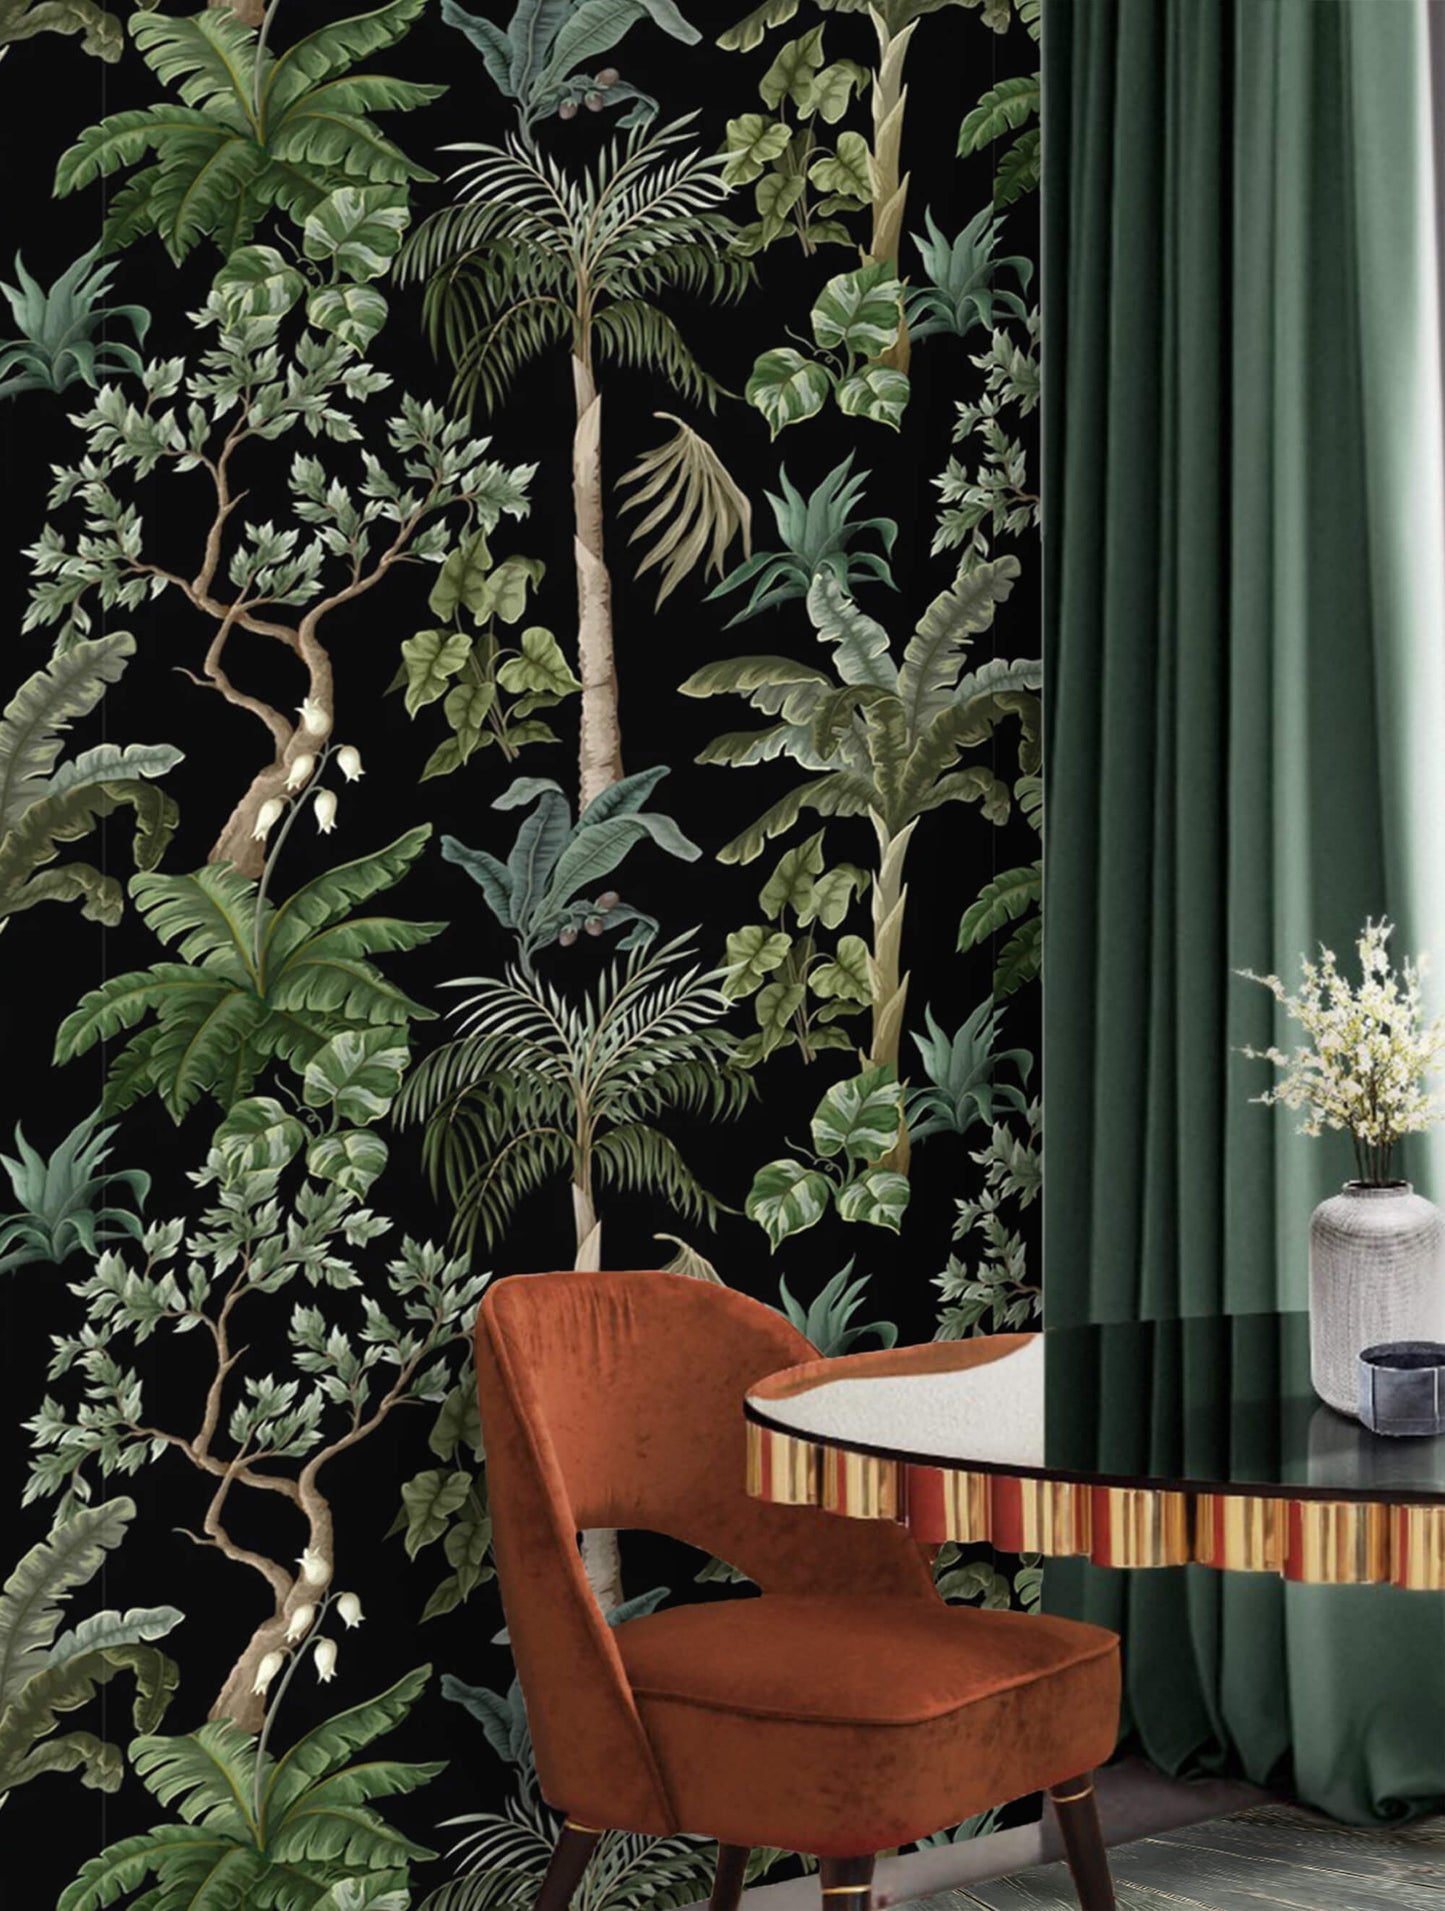 Jungle Foliage Wallpaper